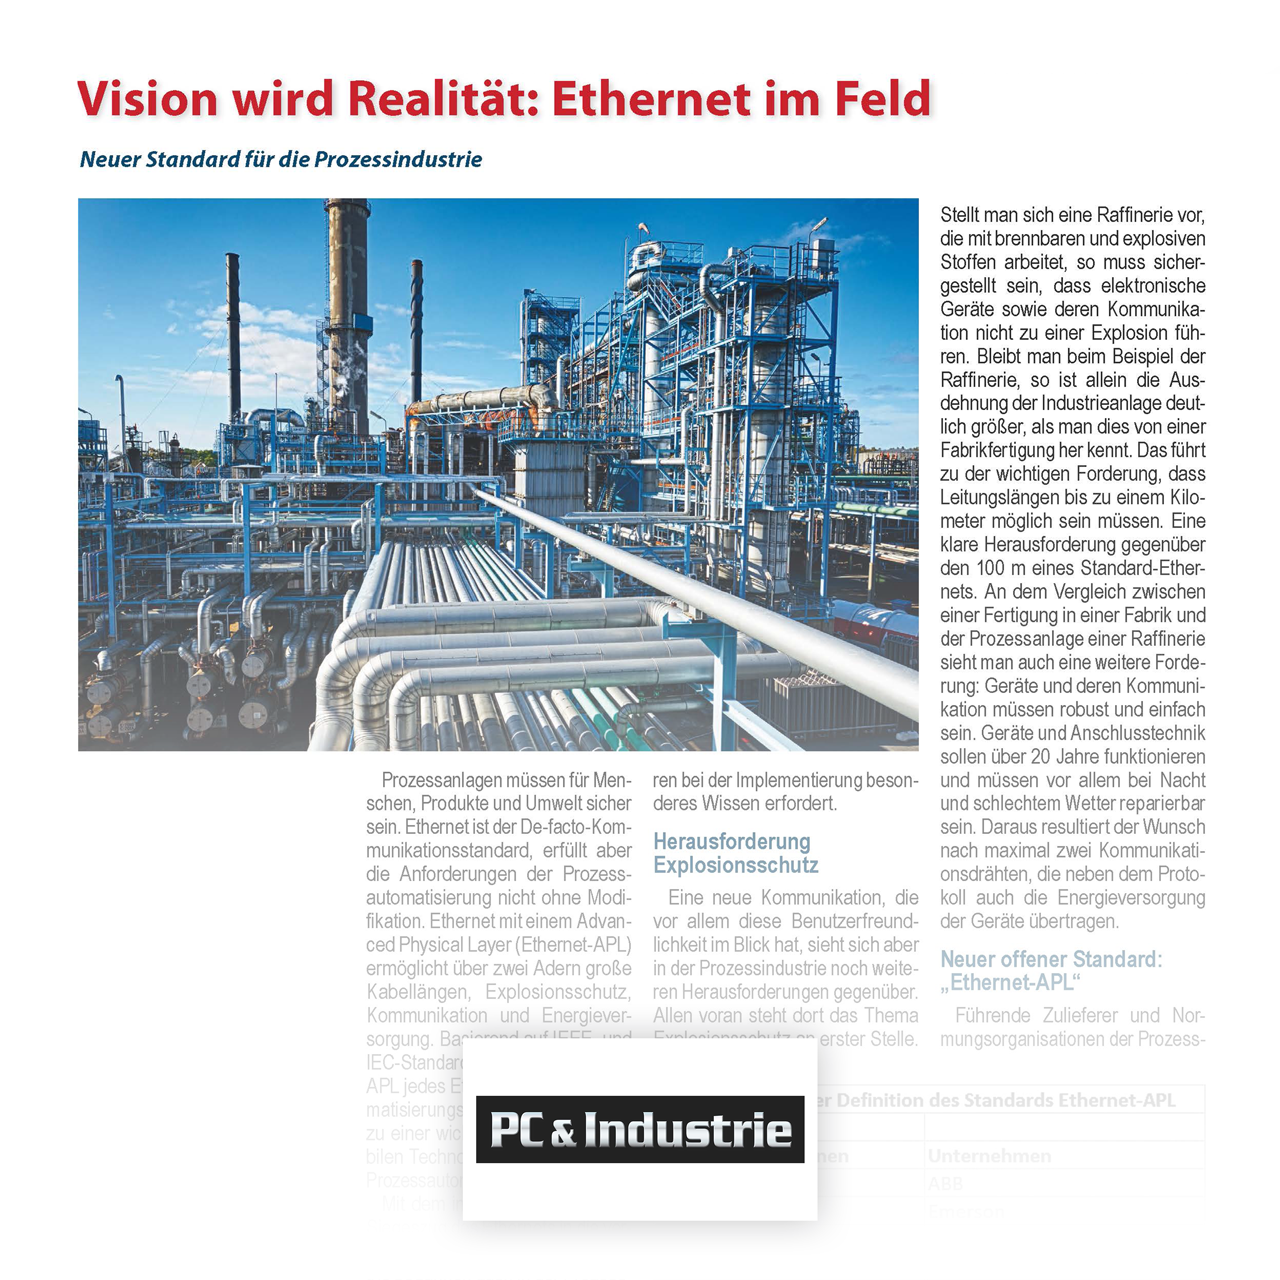 SEGGER Press: Vision wird Realität — Ethernet im Feld